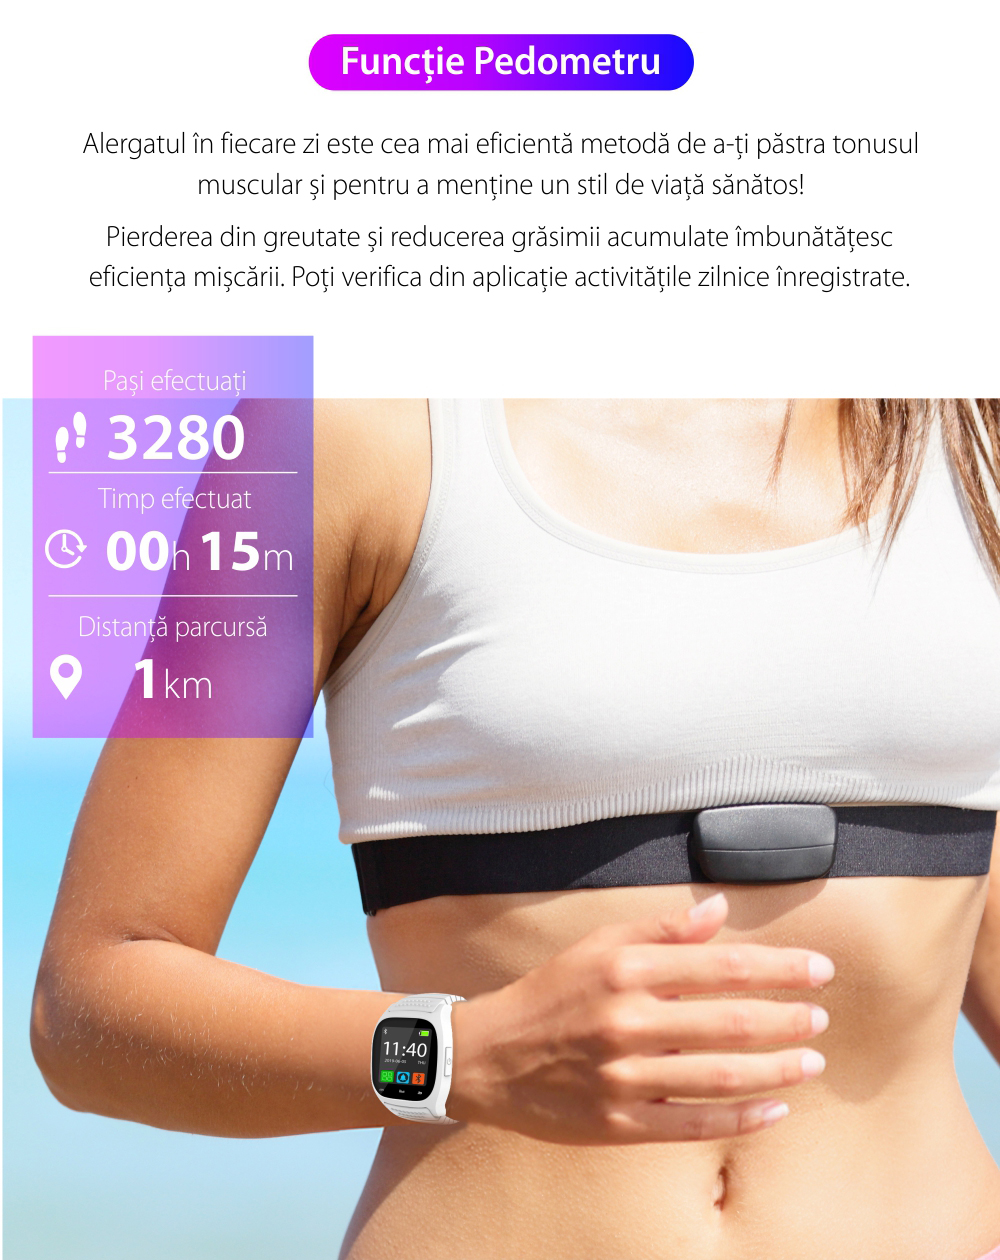 Ceas Smartwatch M26 cu Functie Apelare prin Bluetooth, Pedometru, Notificari, Monitorizare somn – Alb